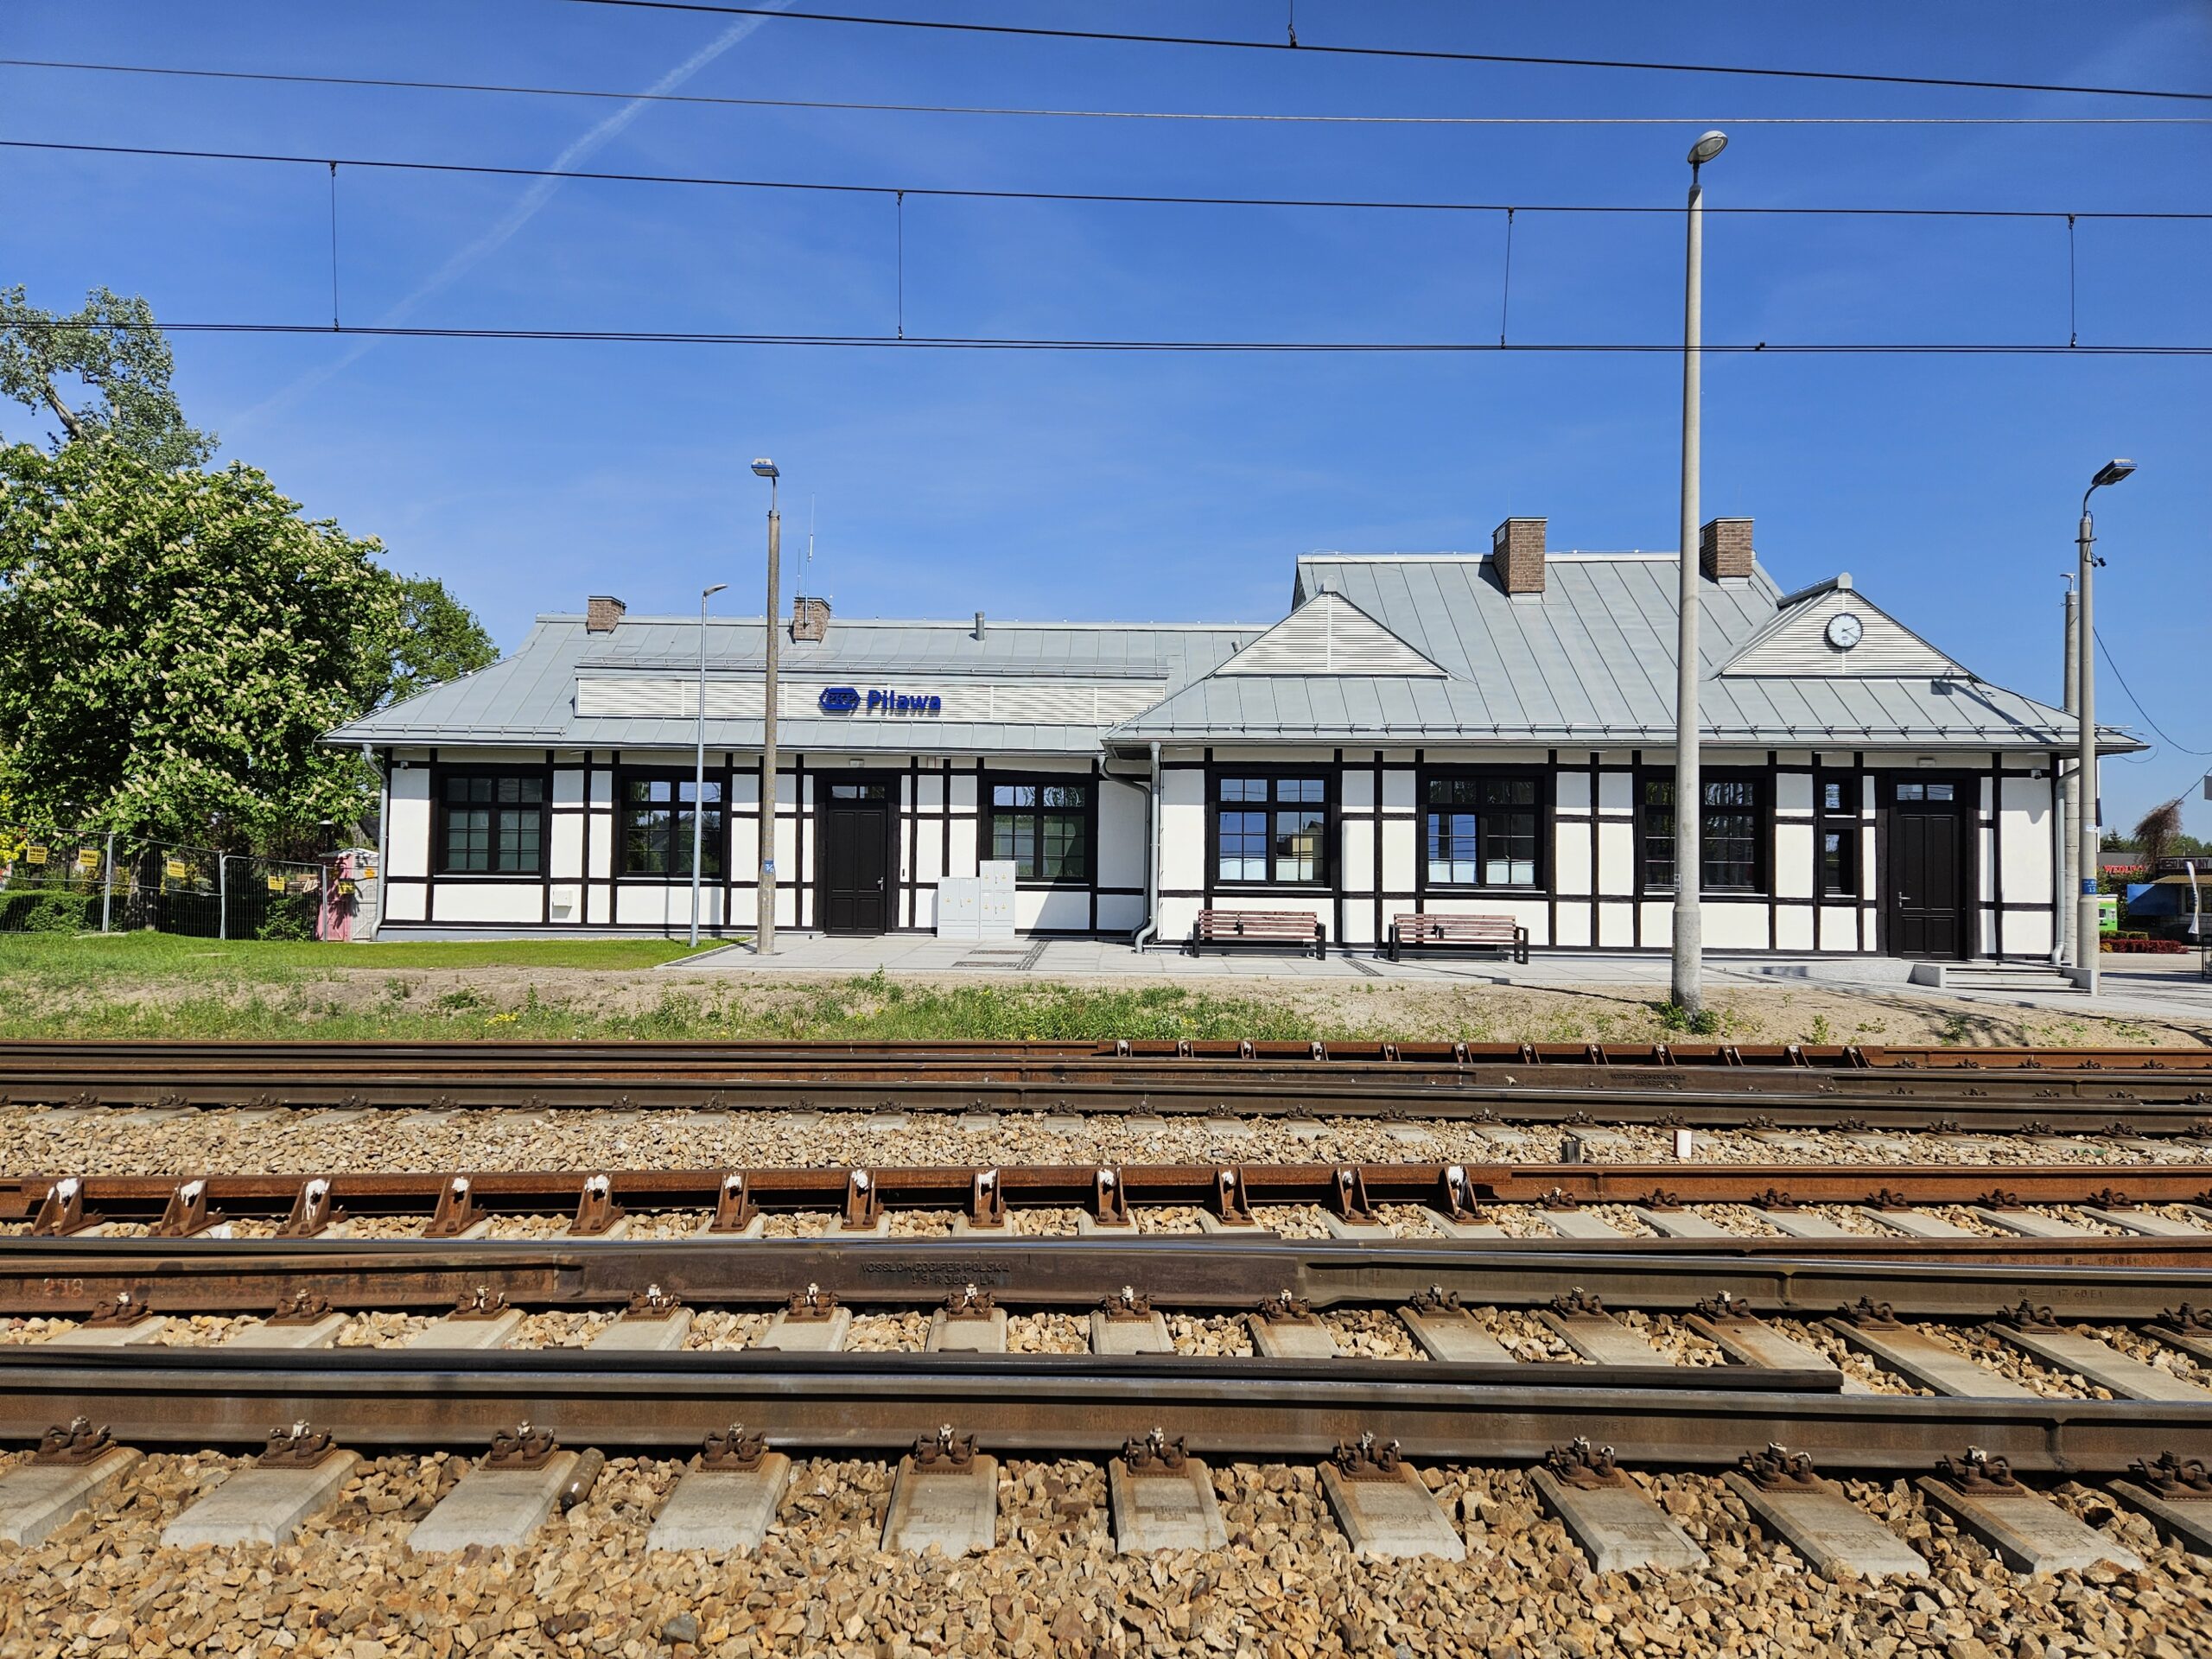 Dworzec kolejowy Pilawa (fot. PKP S.A.)